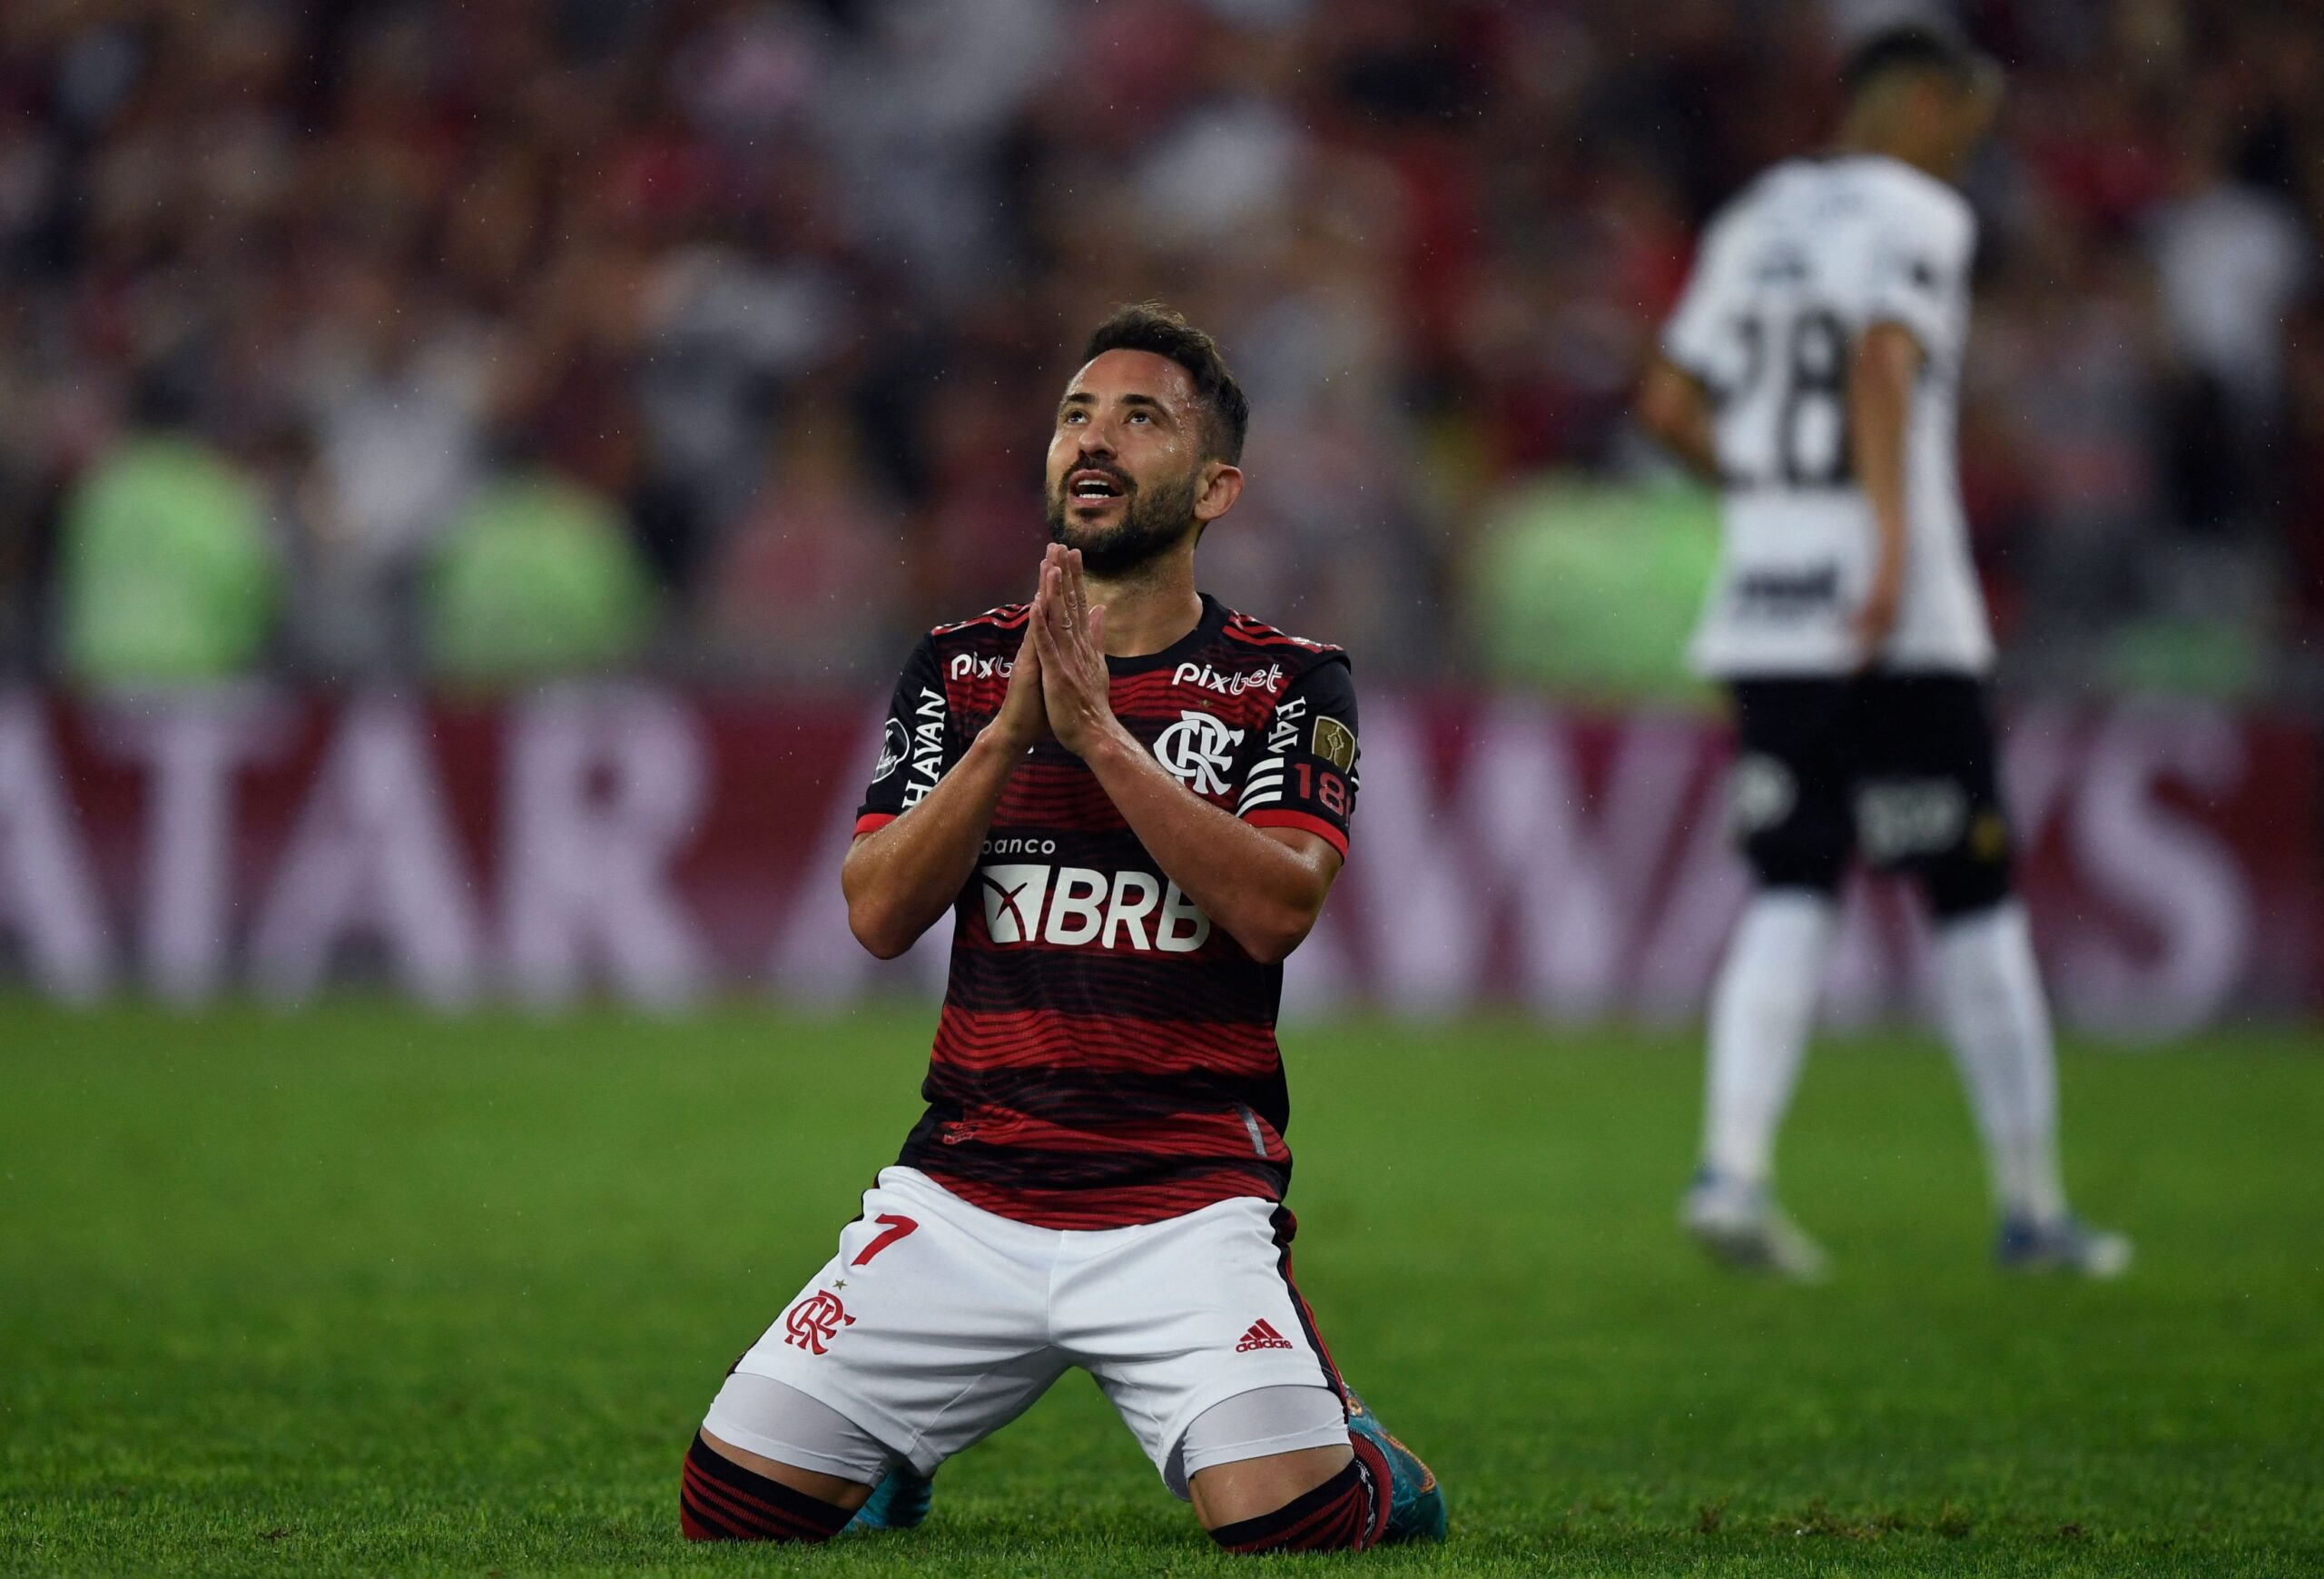 Não importa se estava de costas: lance polêmico de Flamengo x Bragantino  foi pênalti, sim!